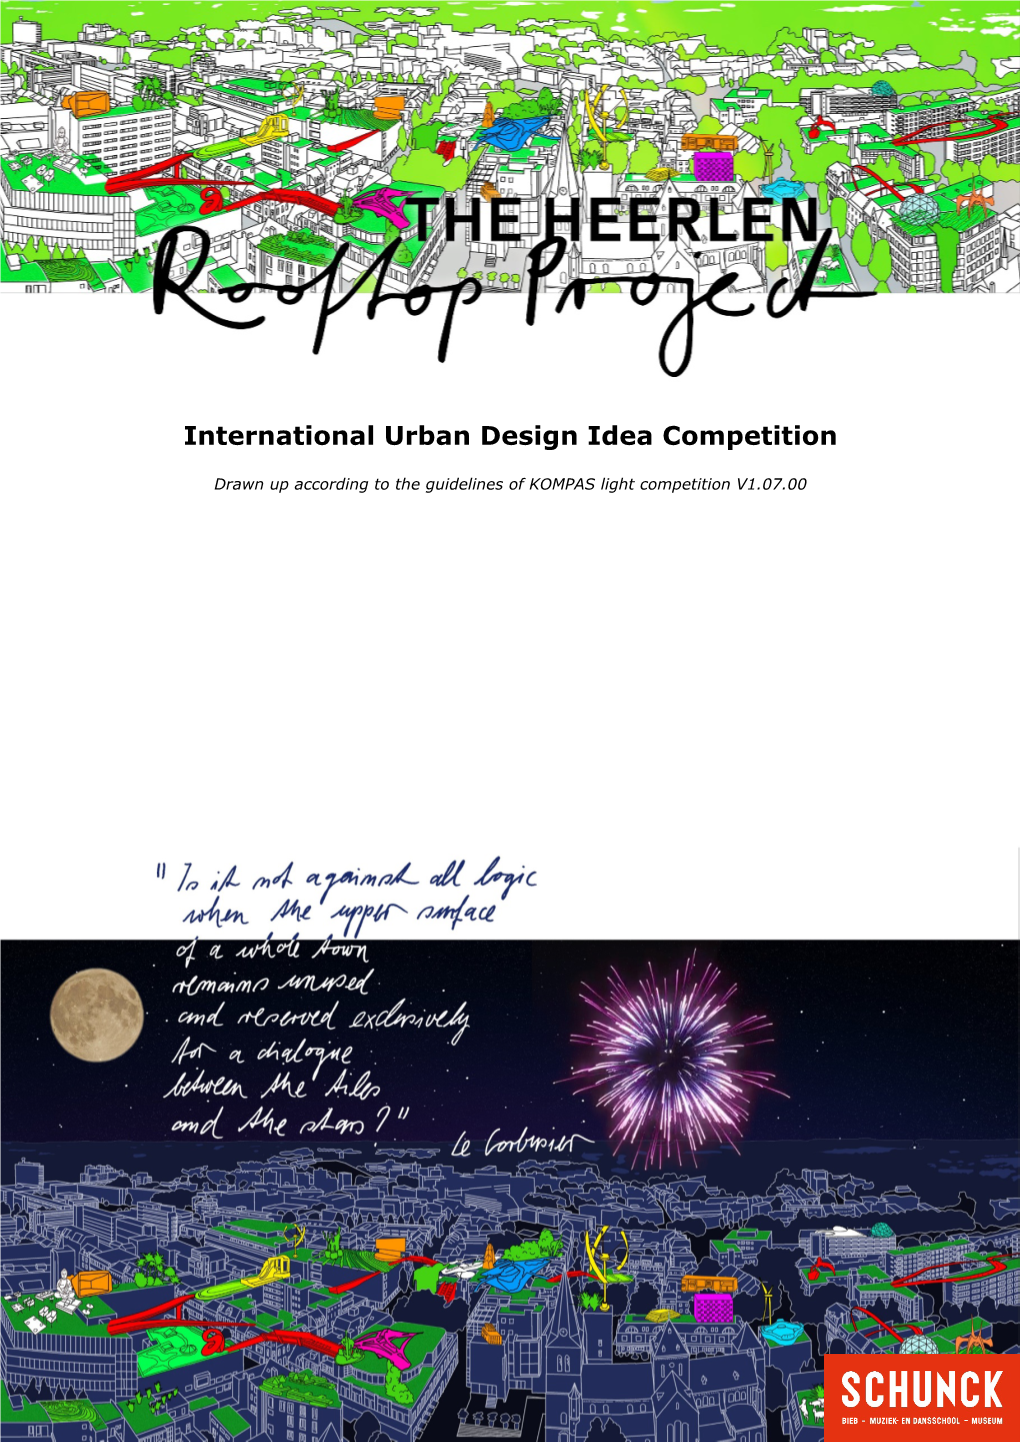 International Urban Design Idea Competition